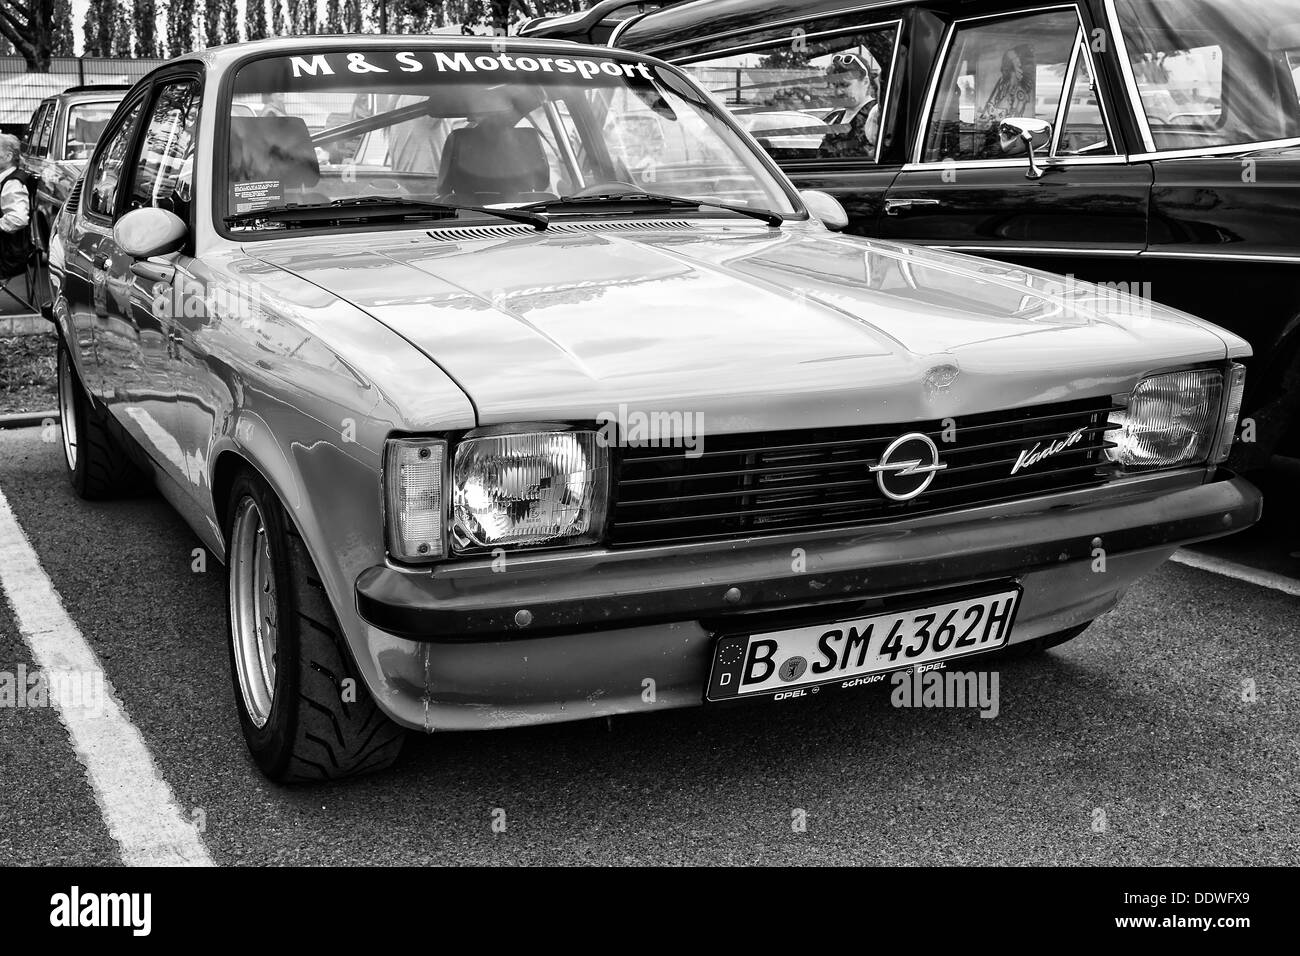 BERLIN - MAY 11: Car Opel Kadett C Coupe (black and white), 26th Oldtimer-Tage Berlin-Brandenburg, May 11, 2013 Berlin, Germany Stock Photo